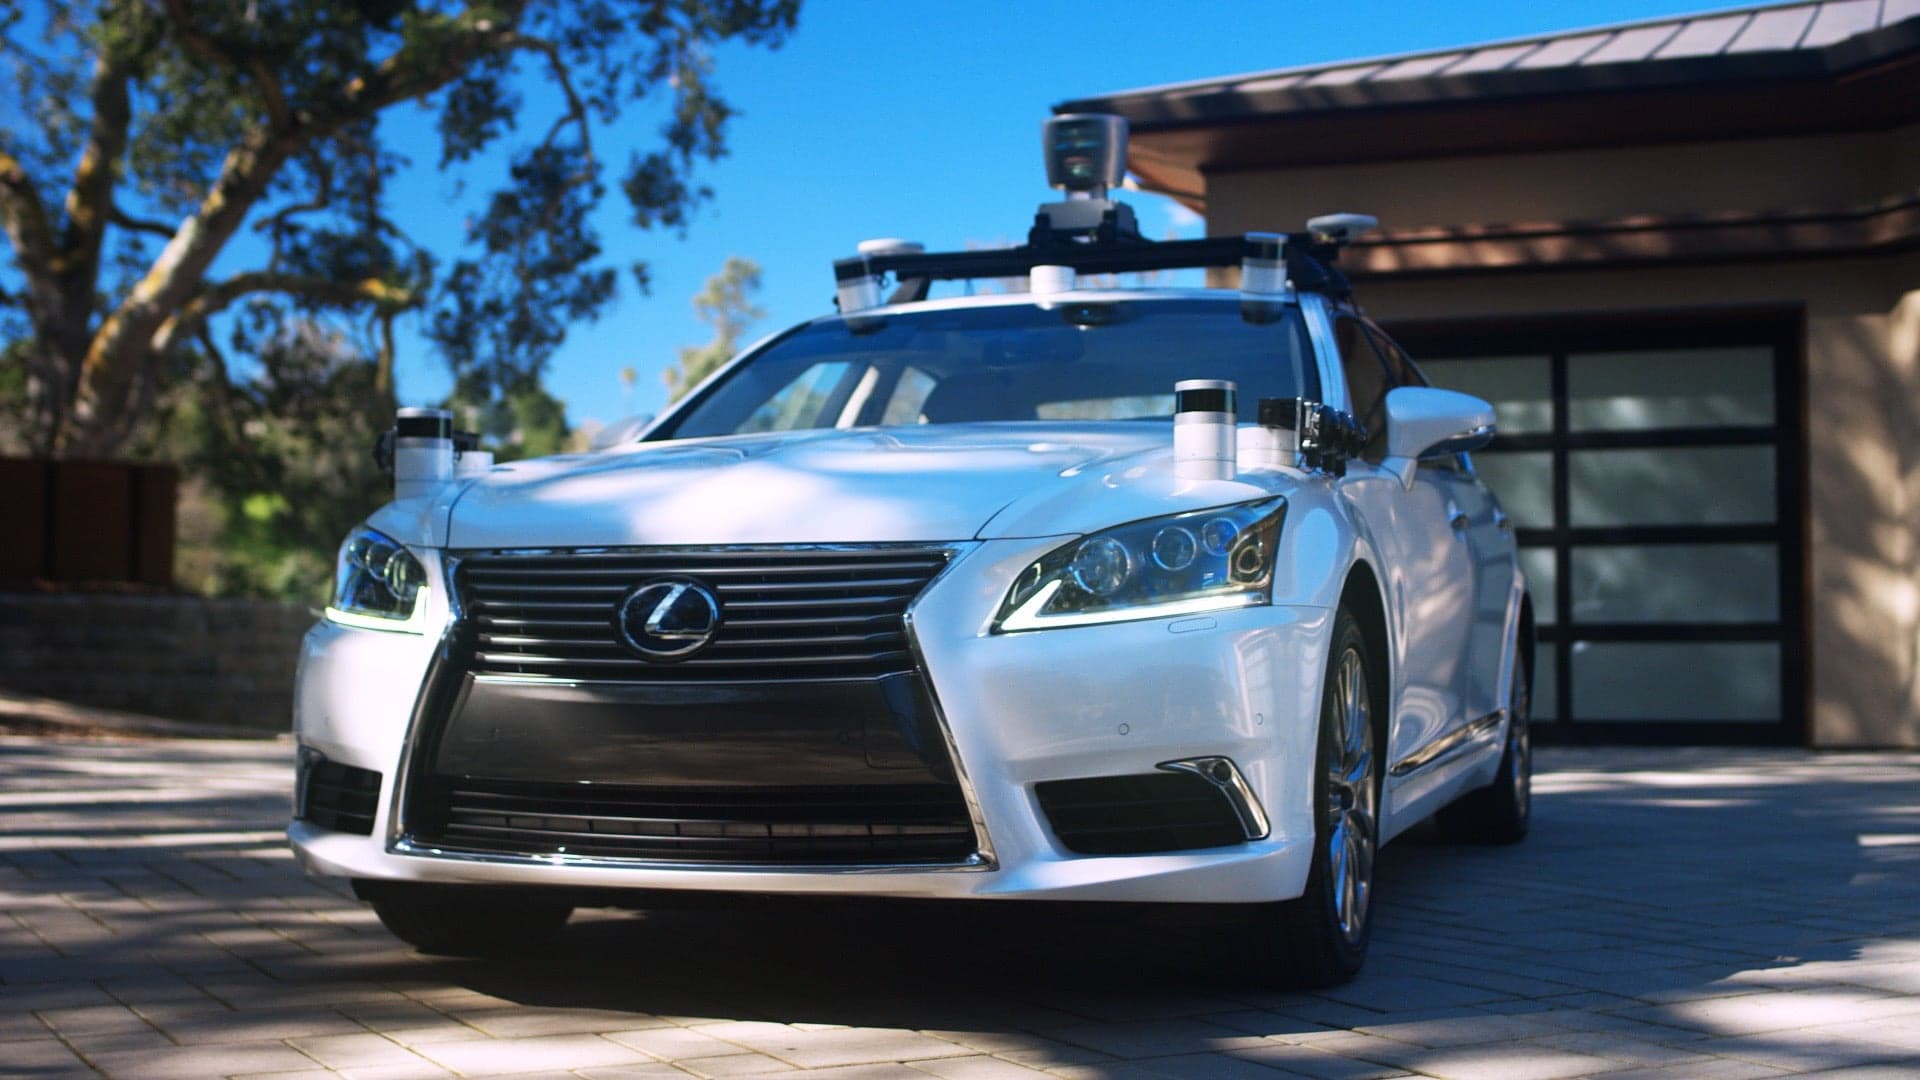 Toyota Autonomous Vehicles Will Soon Take Part in Hazardous Driving Tests